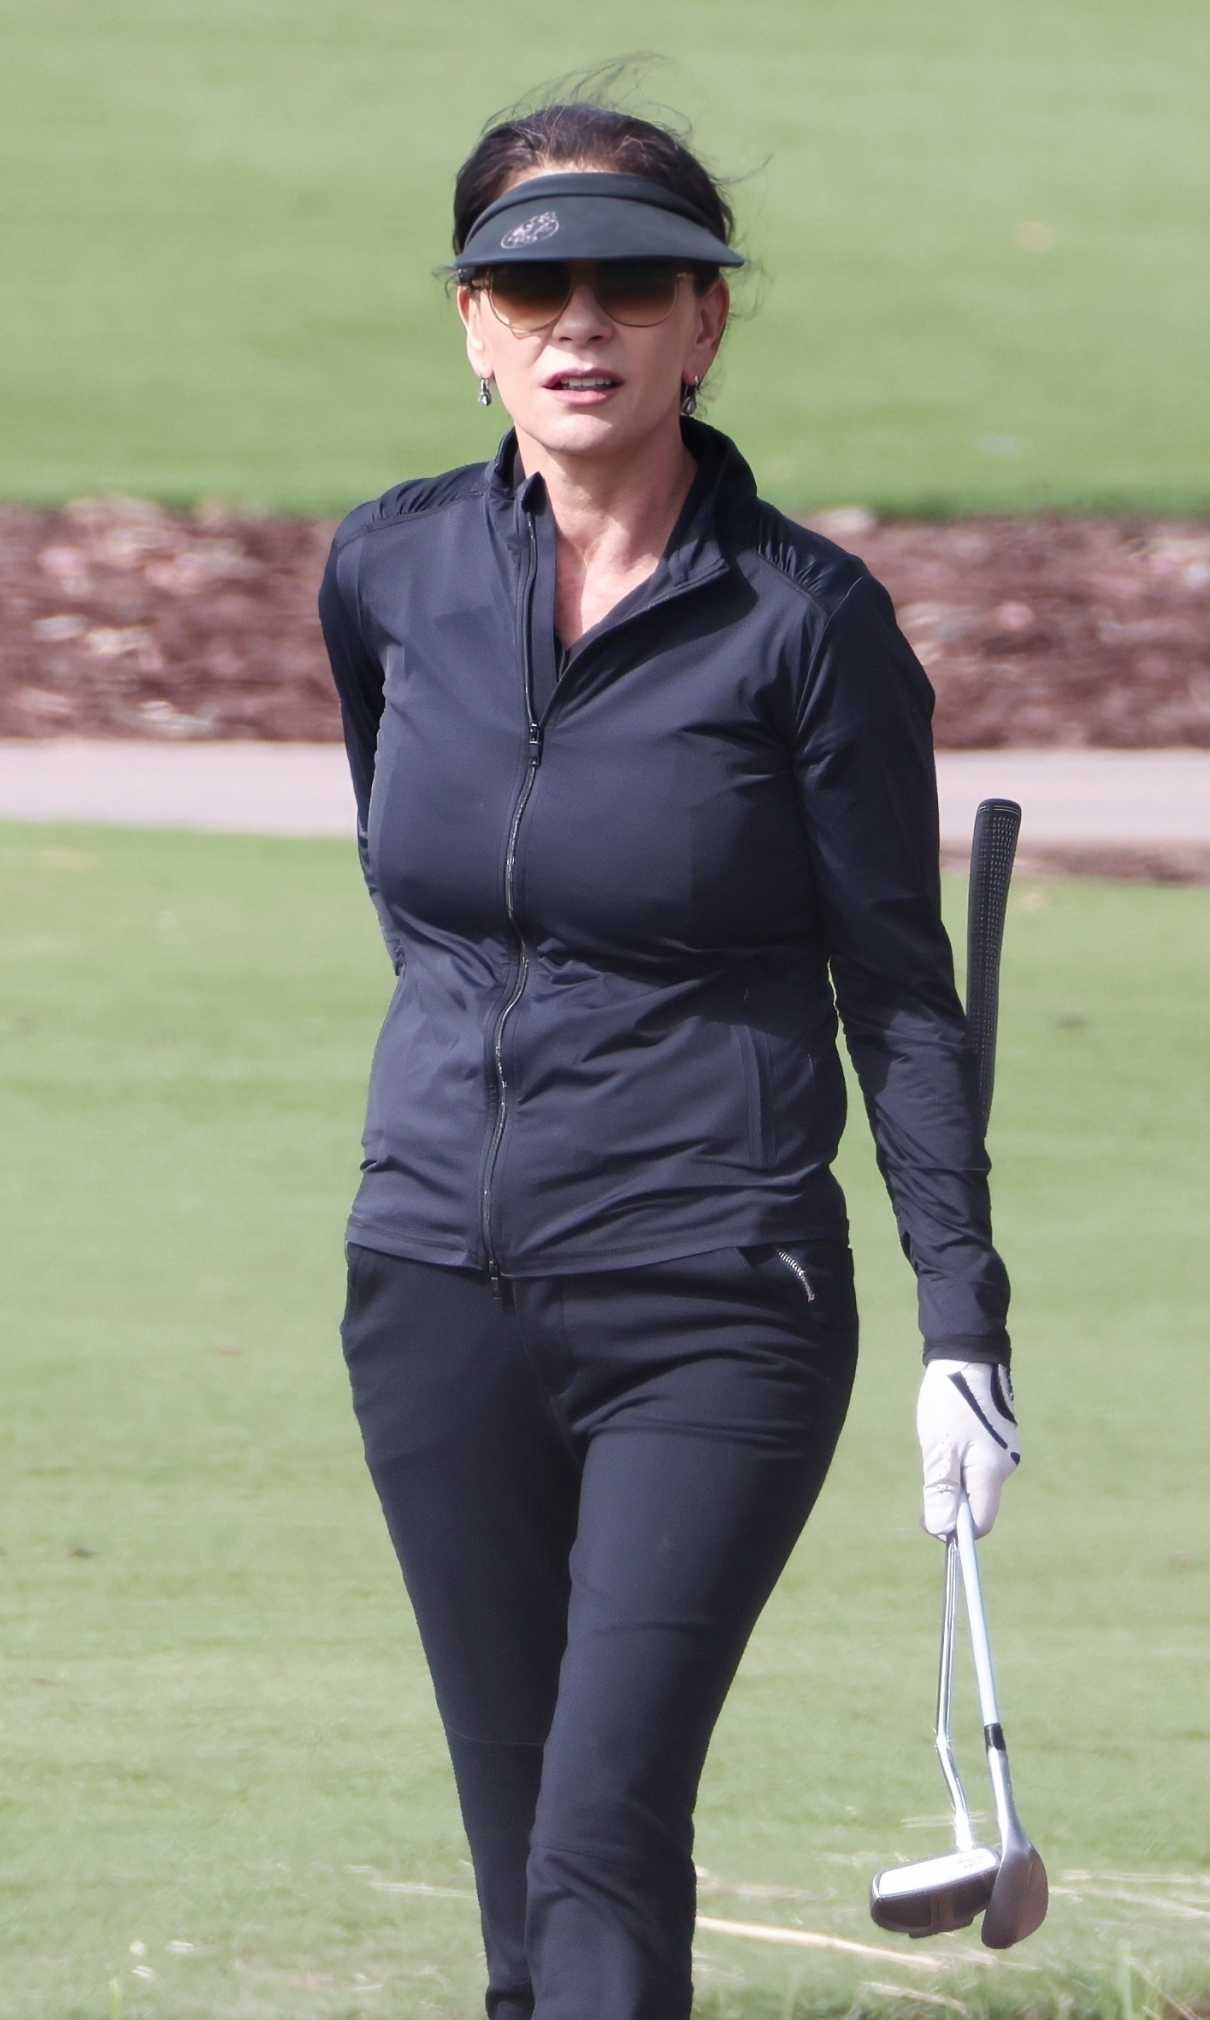 Catherine Zeta-Jones in a Black Outfit